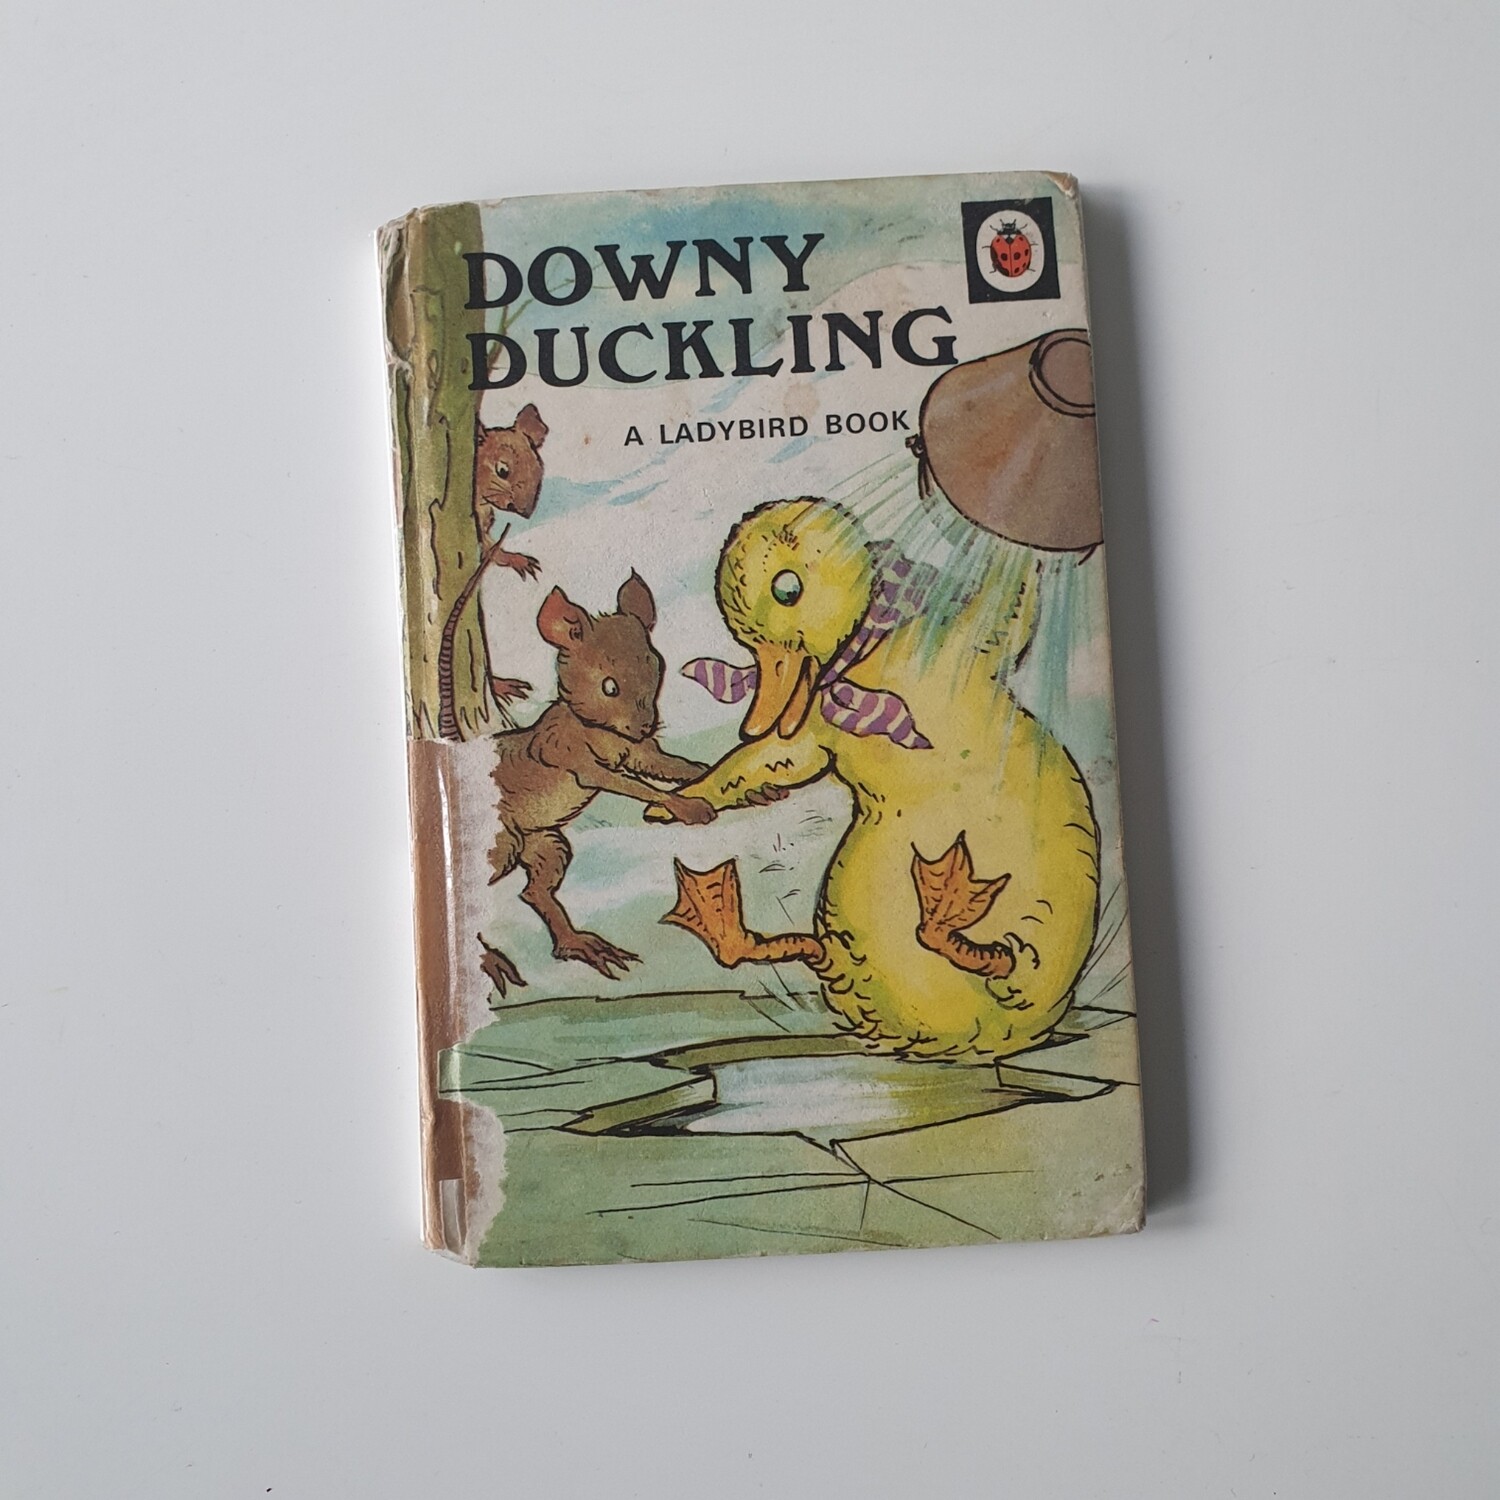 Downy Duckling Notebook - Ladybird book 